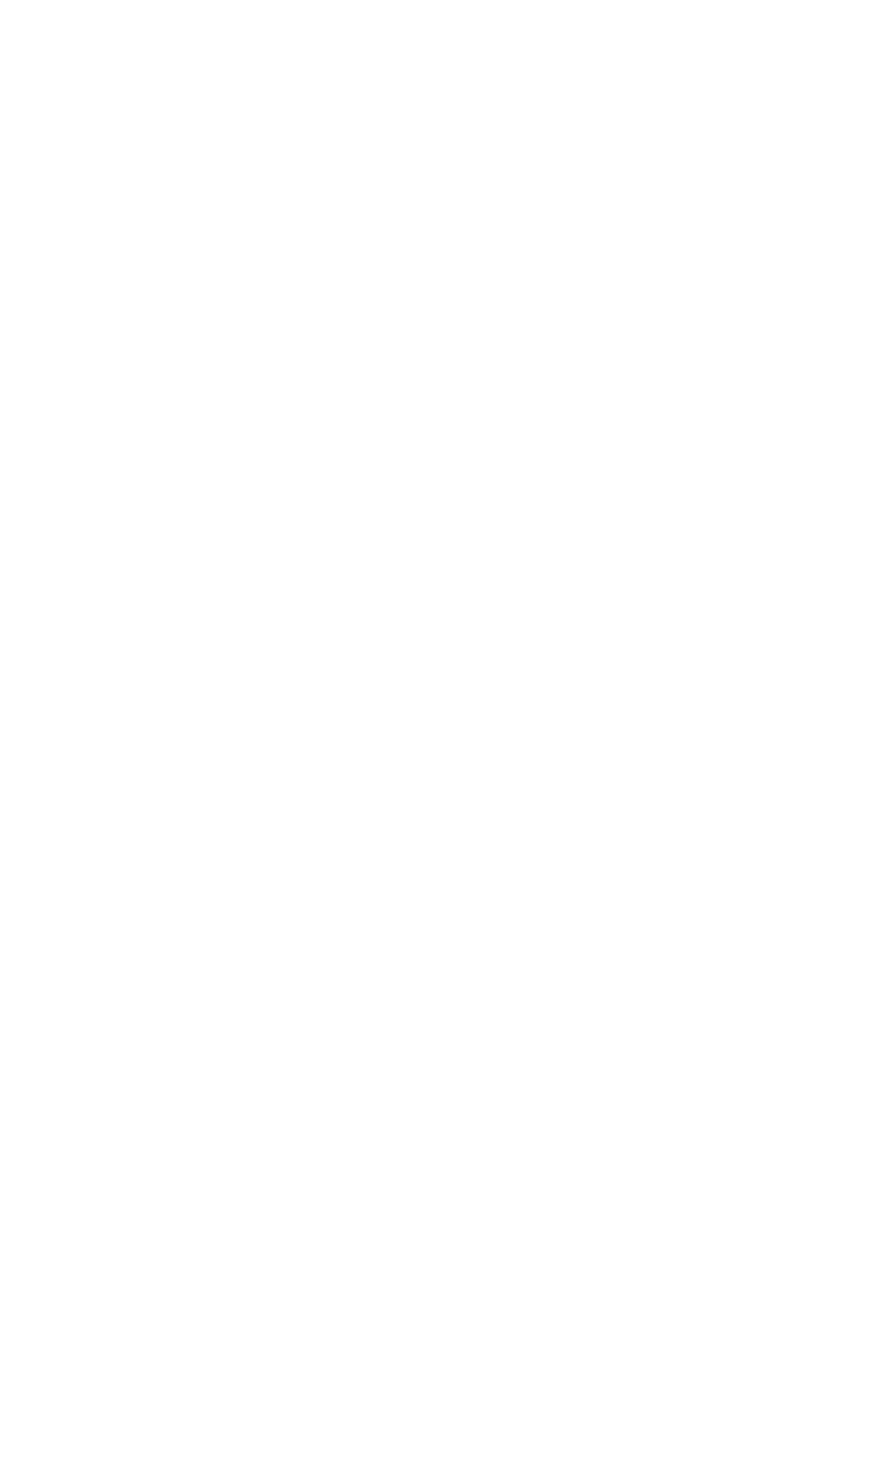 Daniels Healthcare